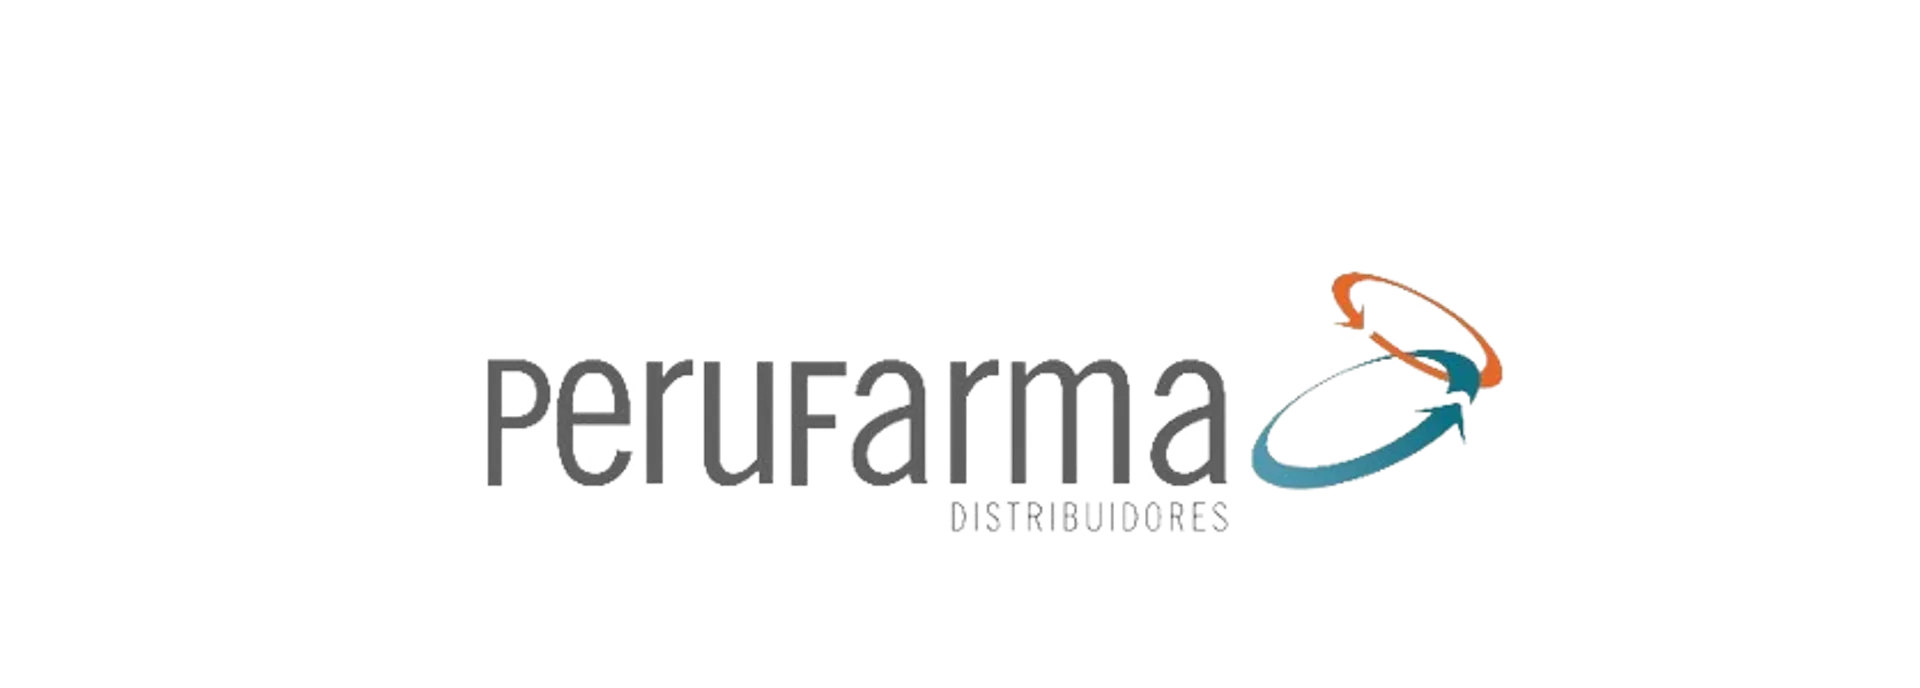 PERUFARMA logo